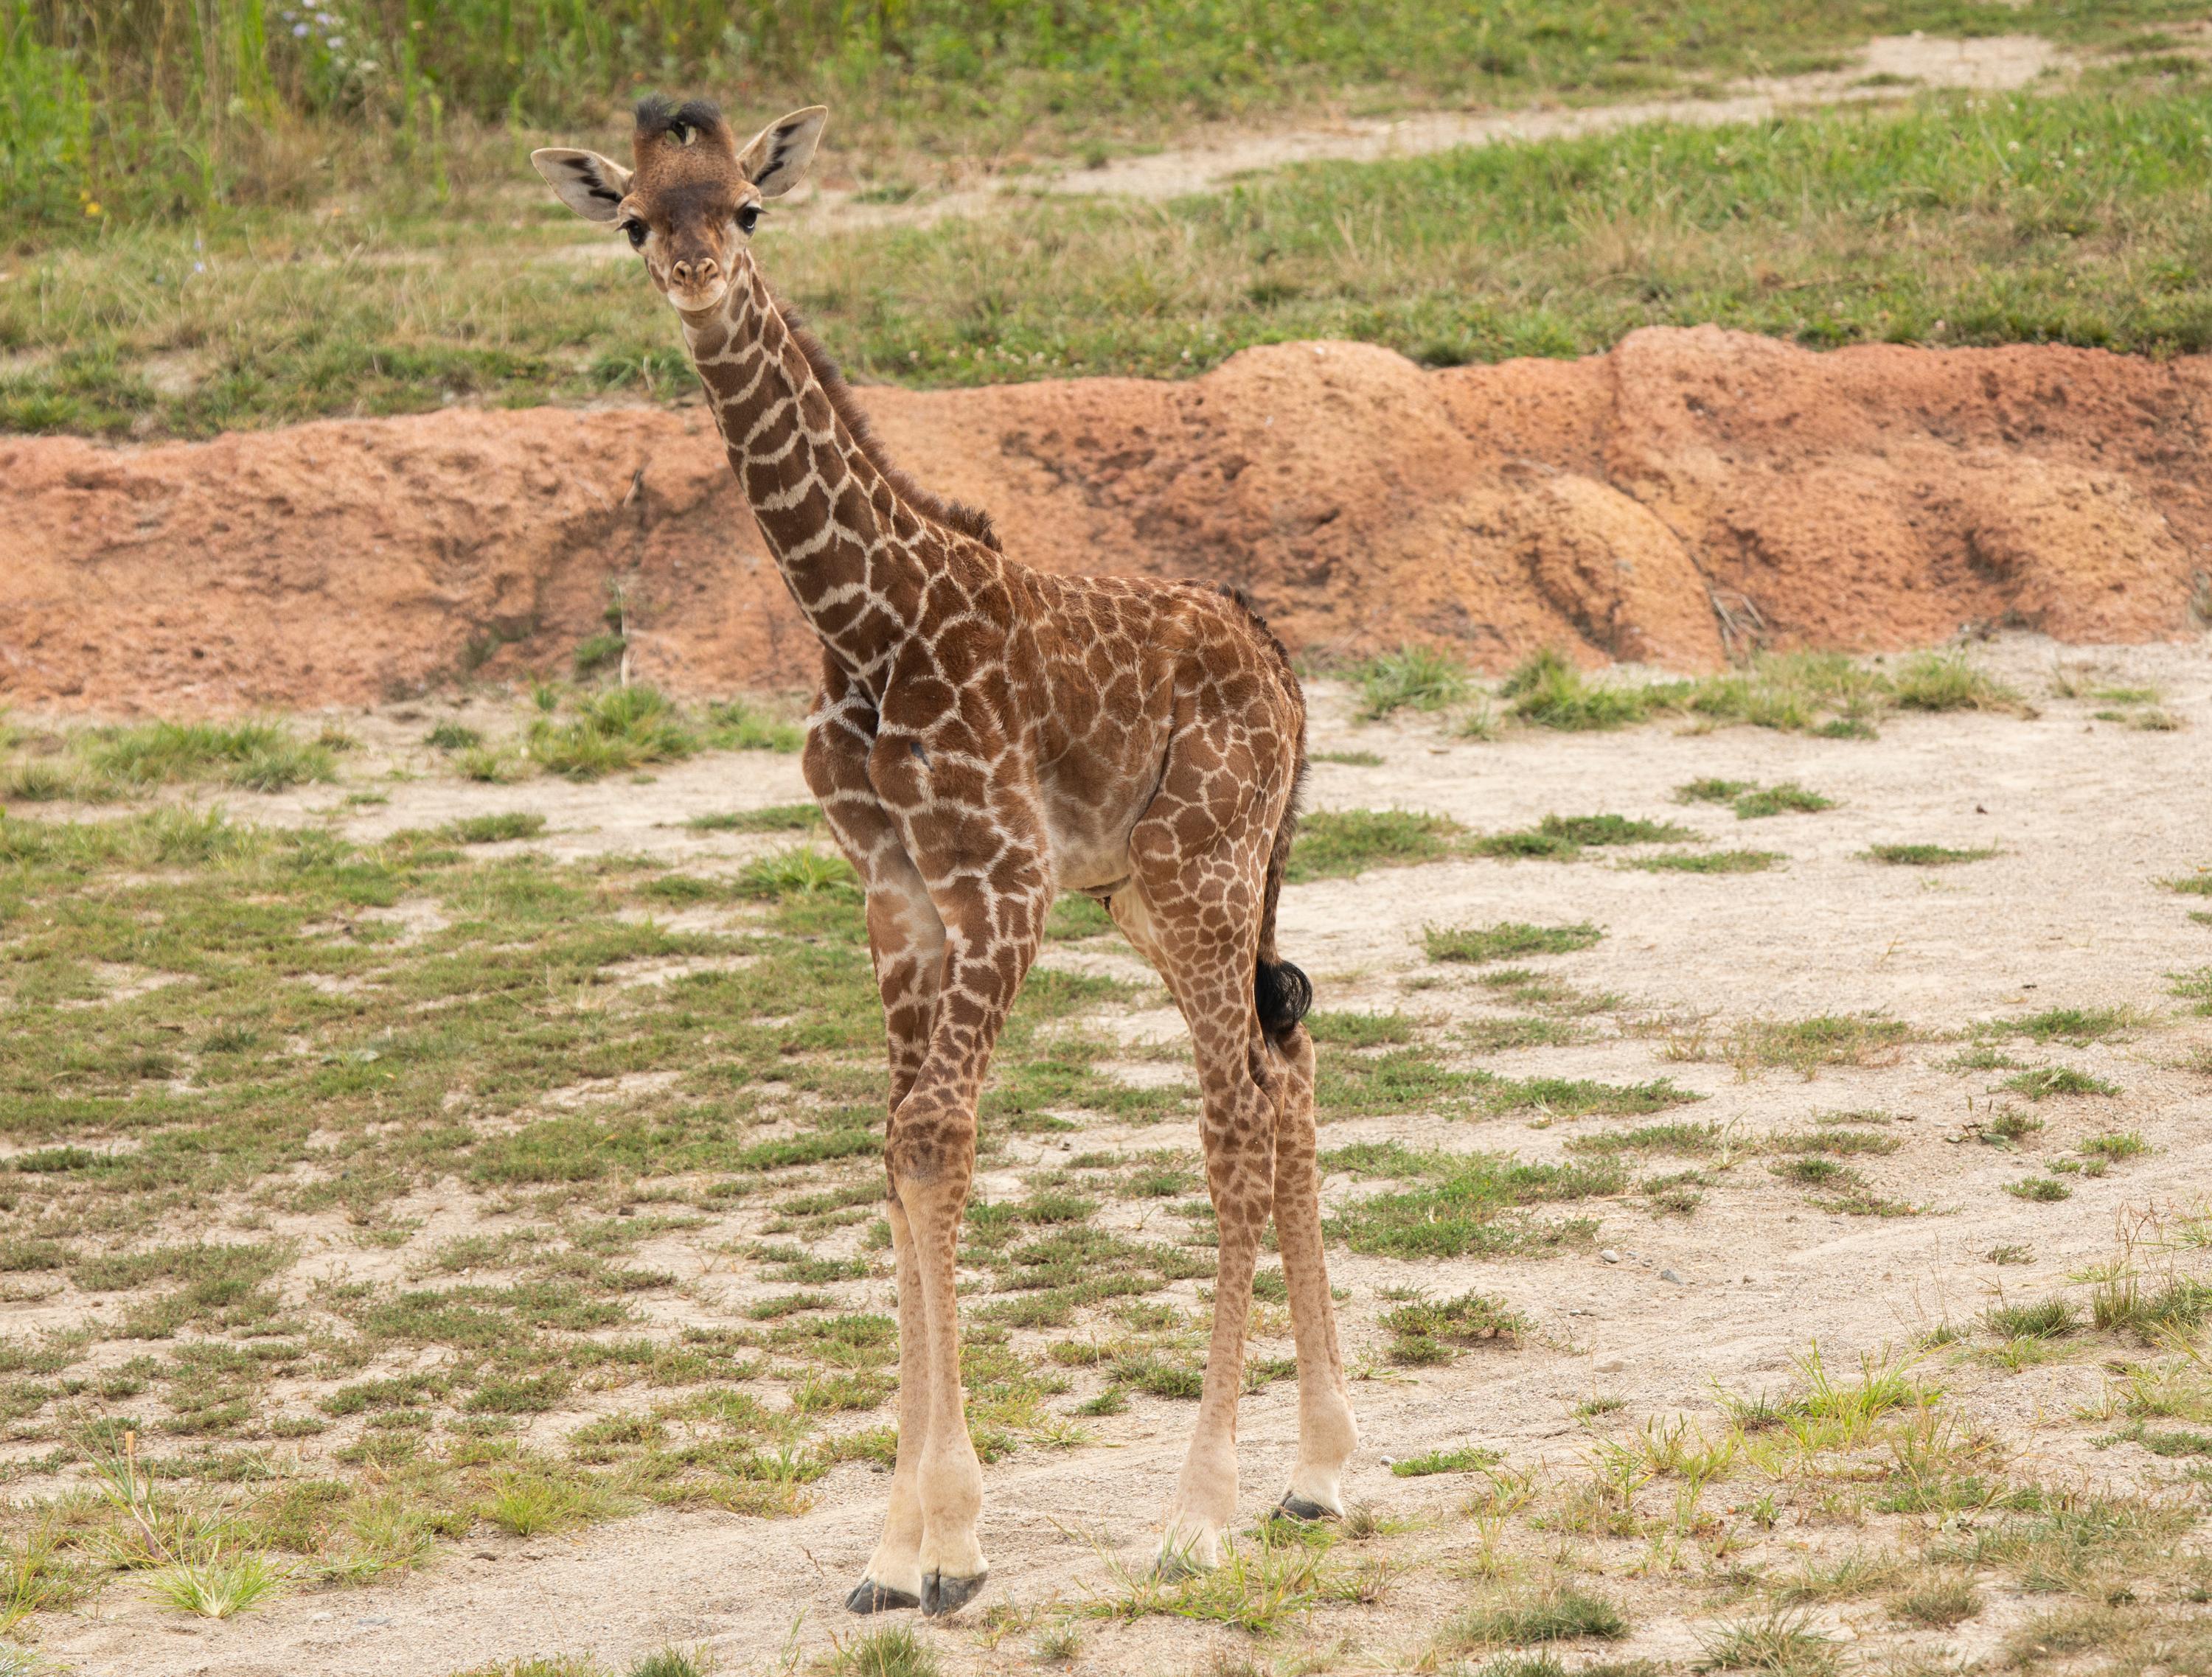 columbus zoo giraffe